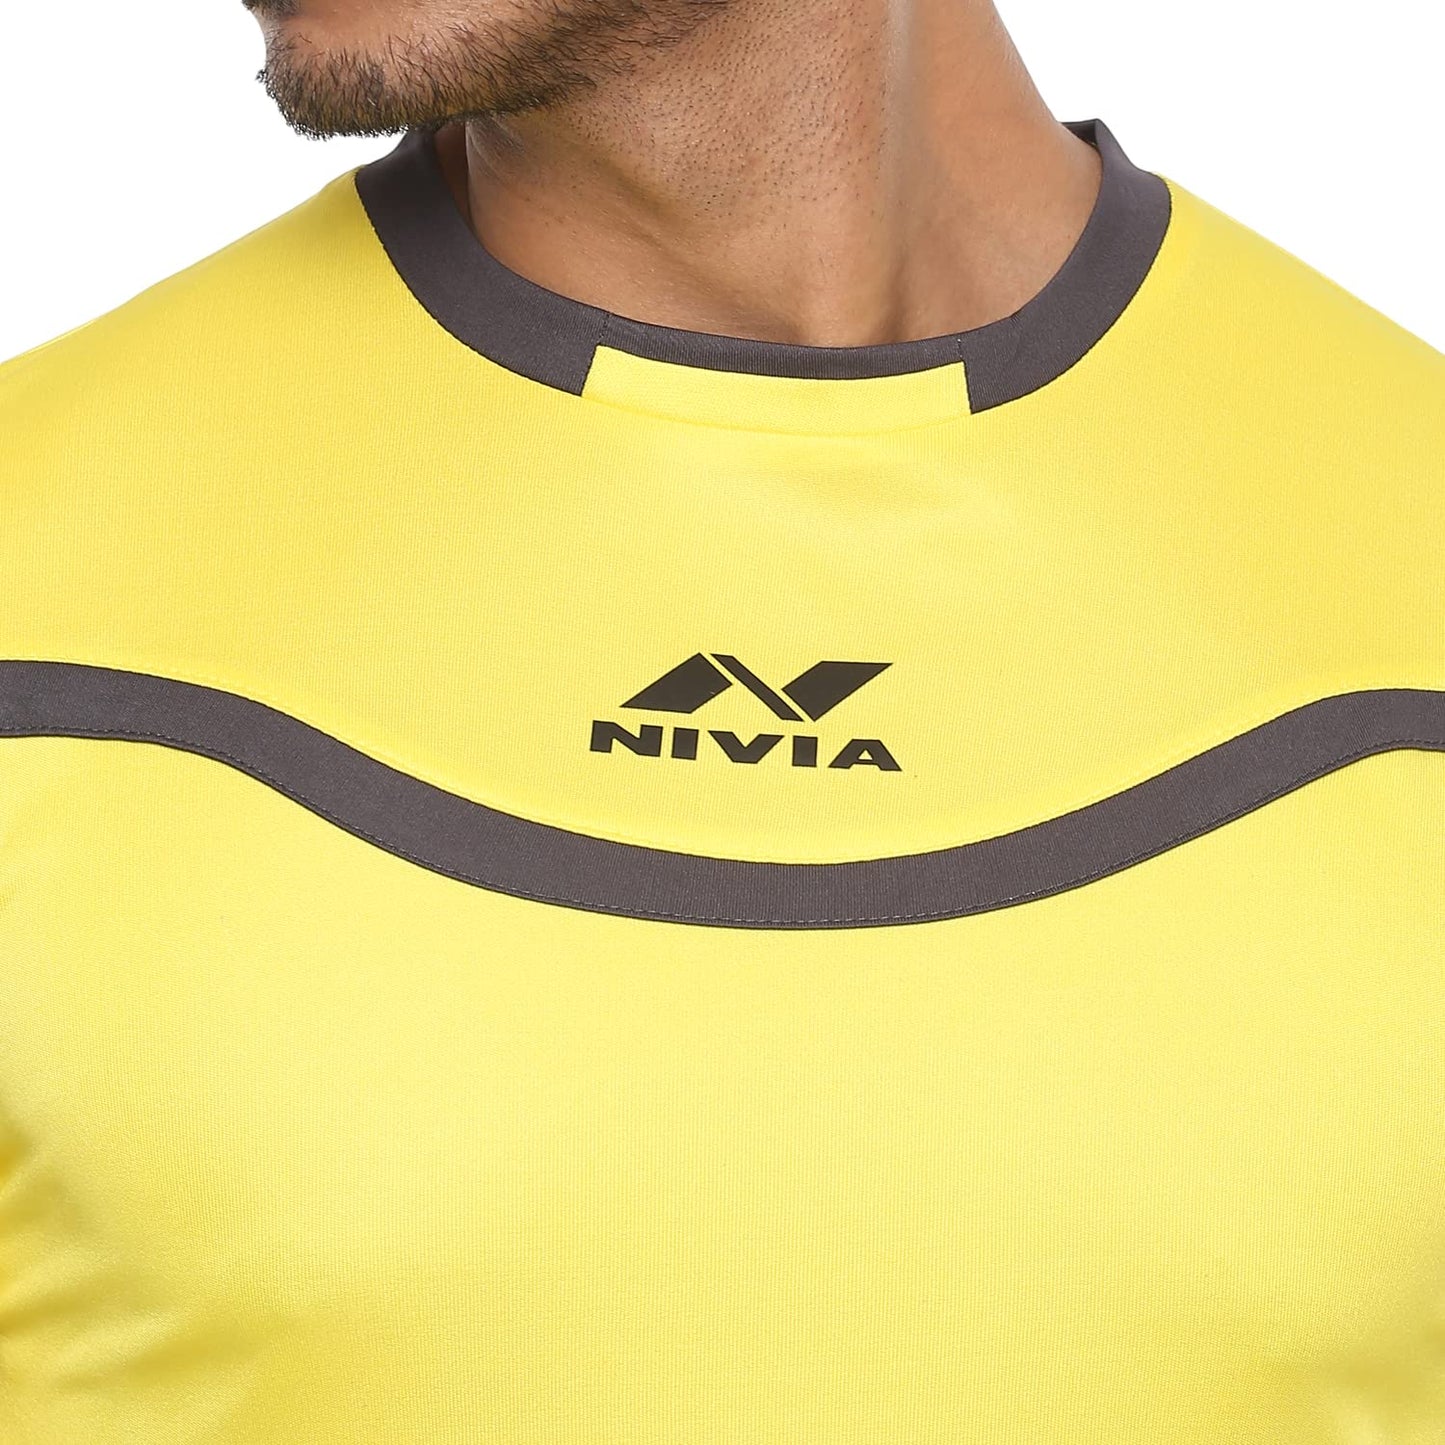 Nivia Armour Goal Keeper Jersey, Yellow/Black - Best Price online Prokicksports.com